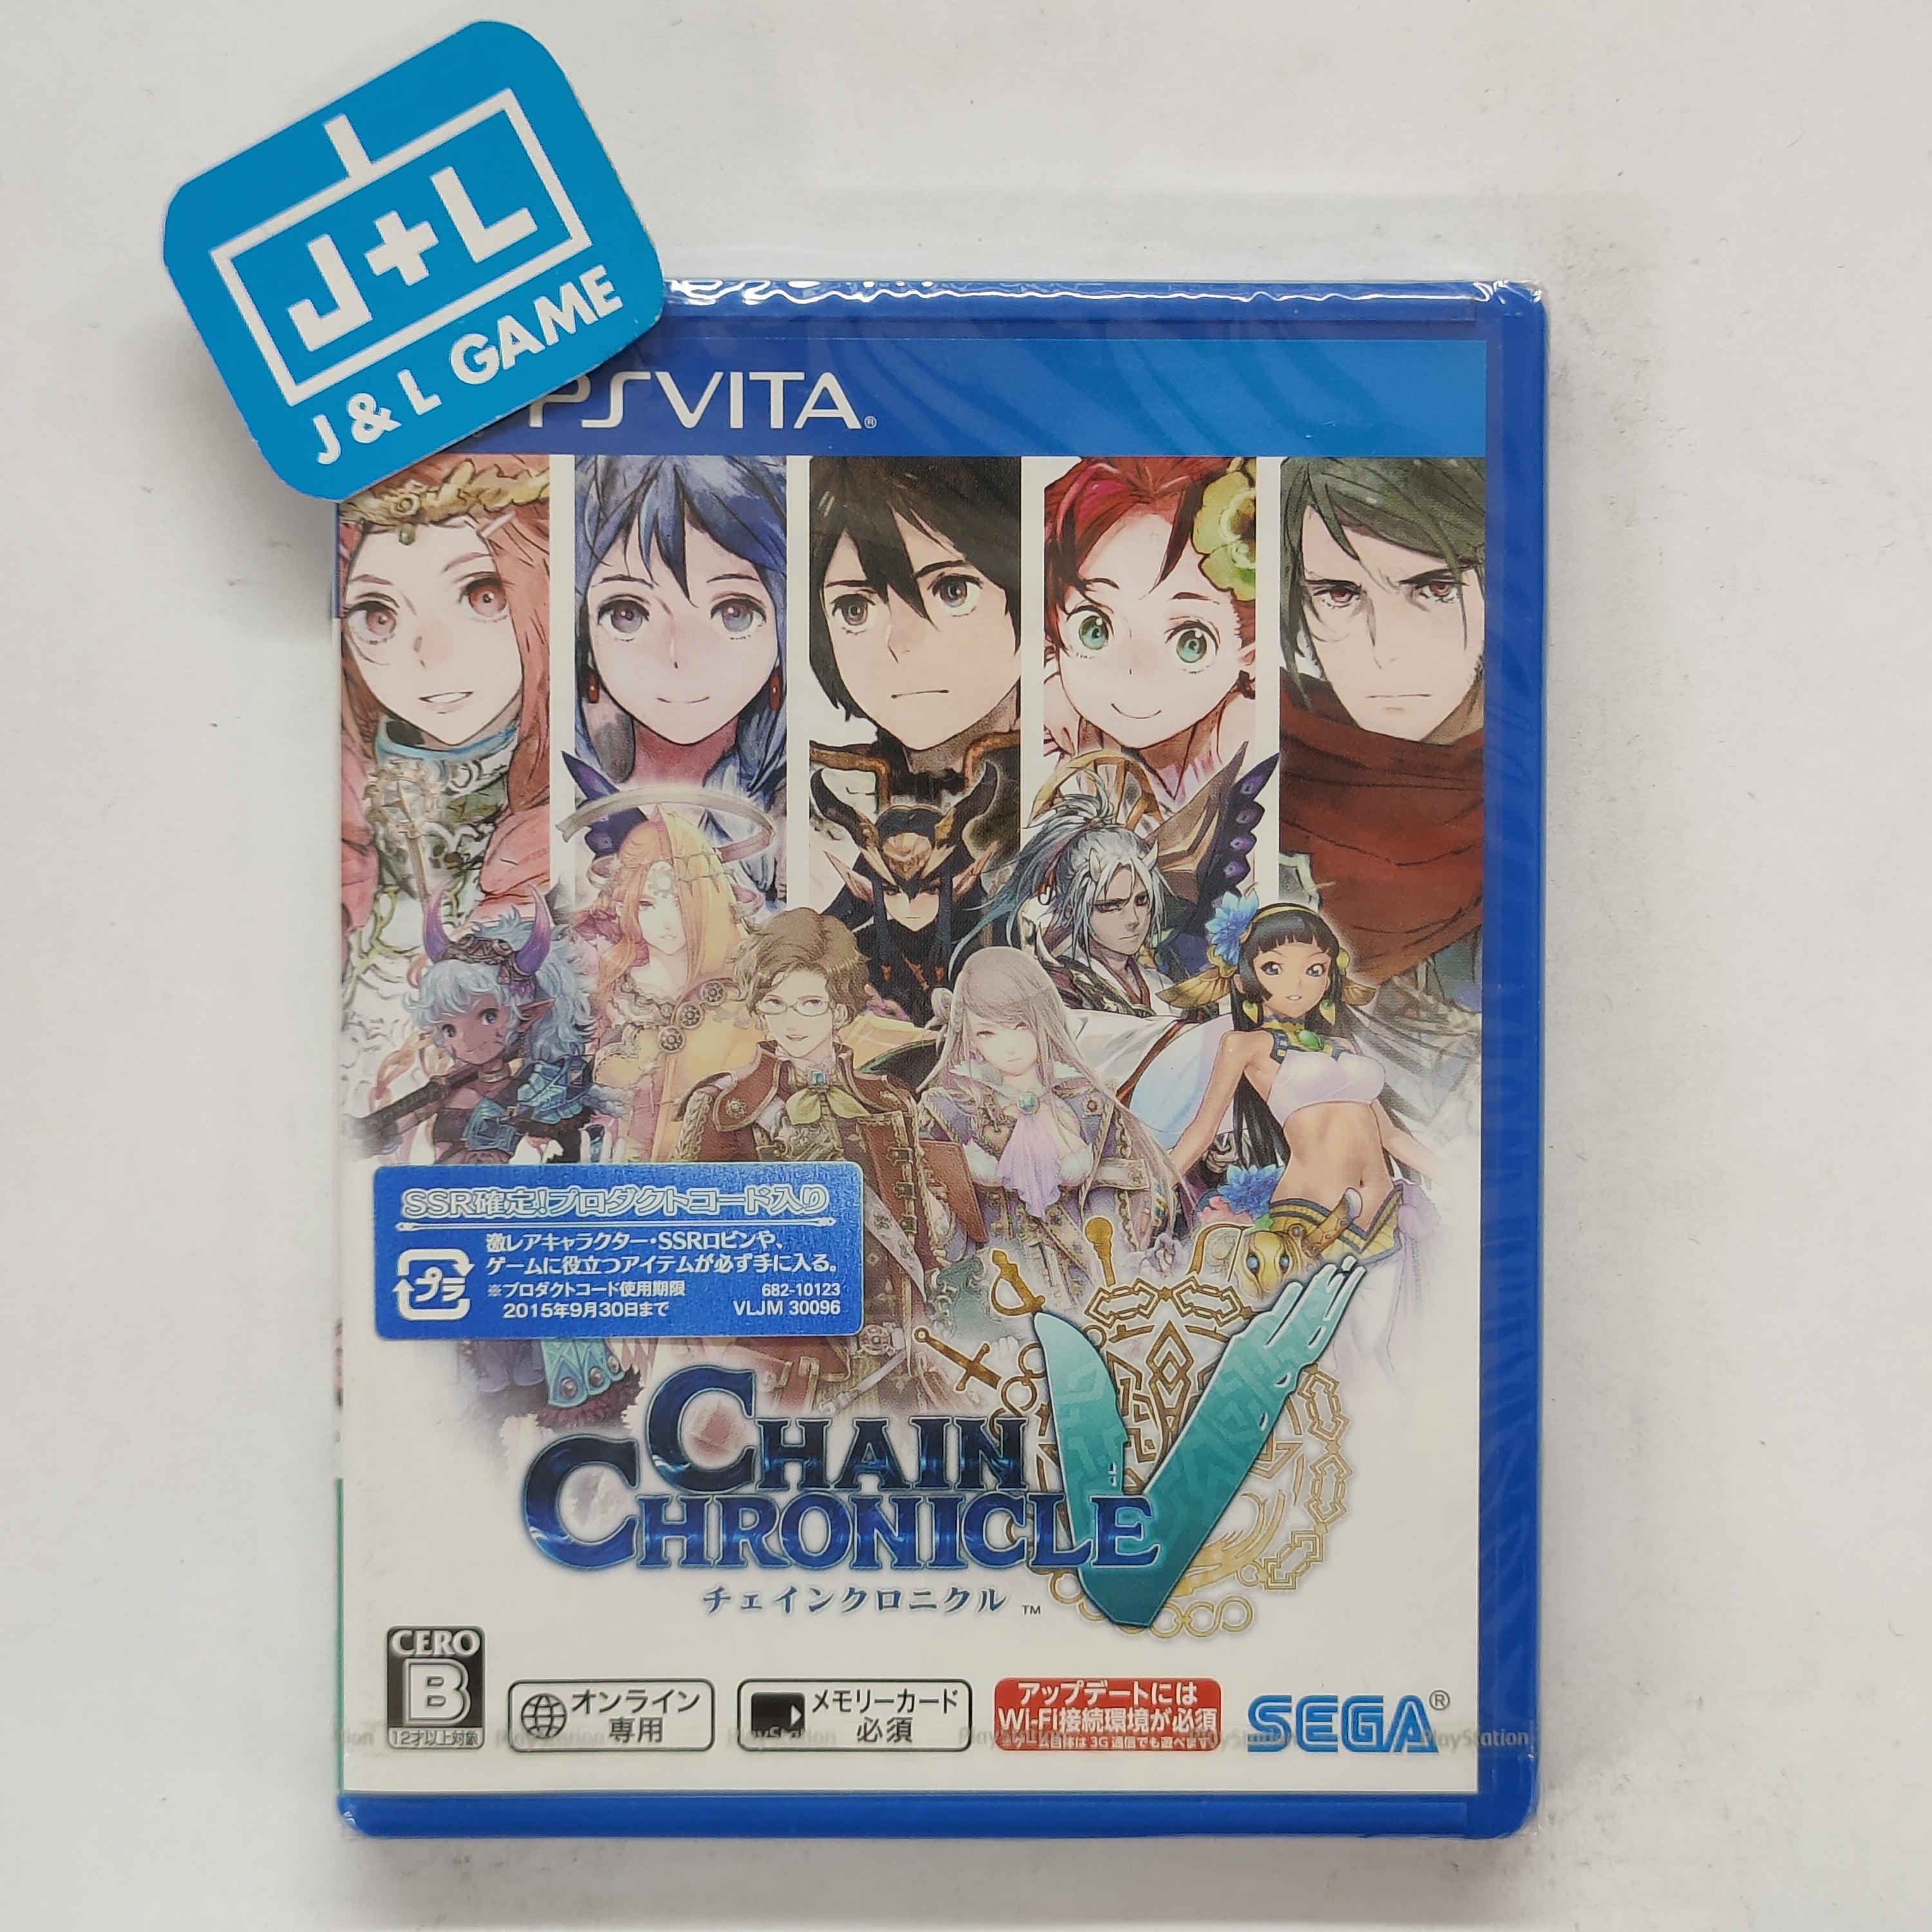 Chain Chronicle V - (PSV) PlayStation Vita (Japanese Import) Video Games SEGA   